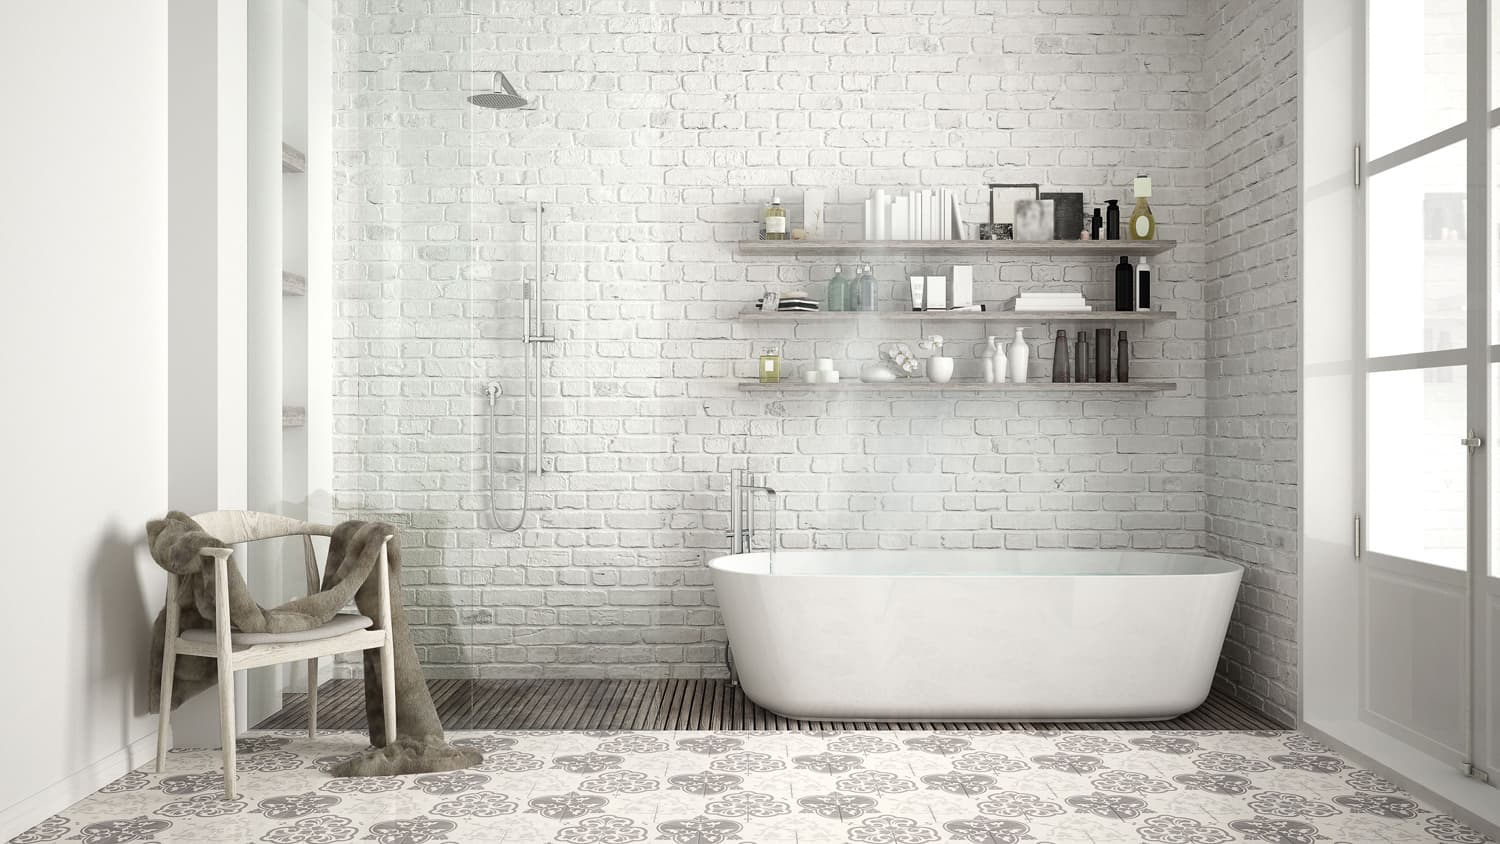 10 Trending Bathroom Design Ideas, Industrial Floating Shelves Bathroom Designs 2018